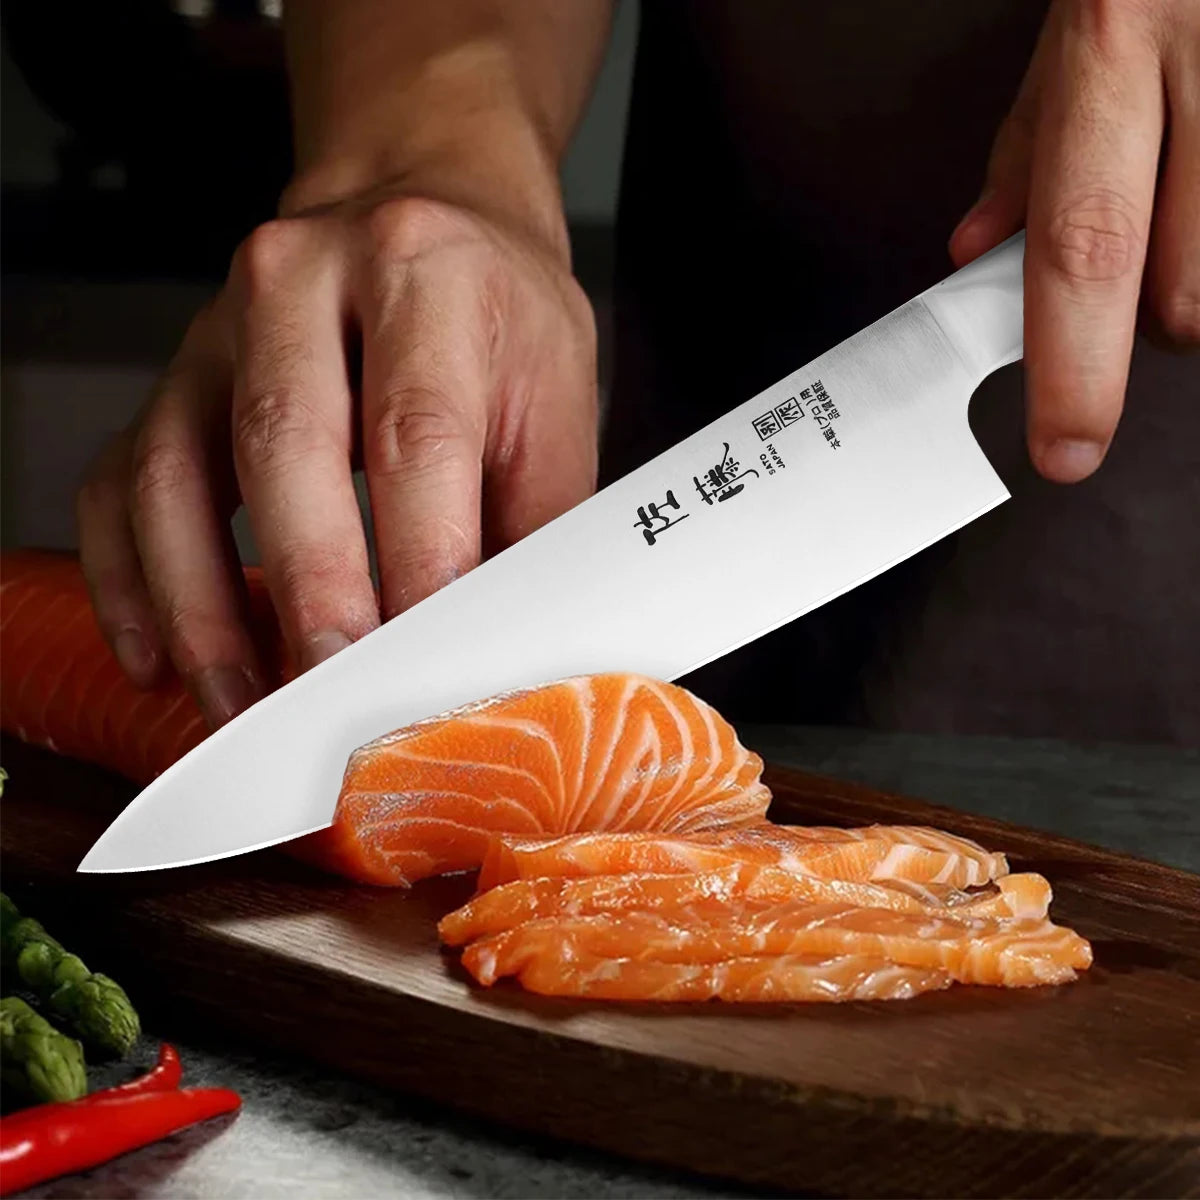 Japanese Santoku Knife Sashimi Knife Japanese Cooking Knives Stainless Steel Chef Knife Meat Cleaver Sharp Kitchen Scissors